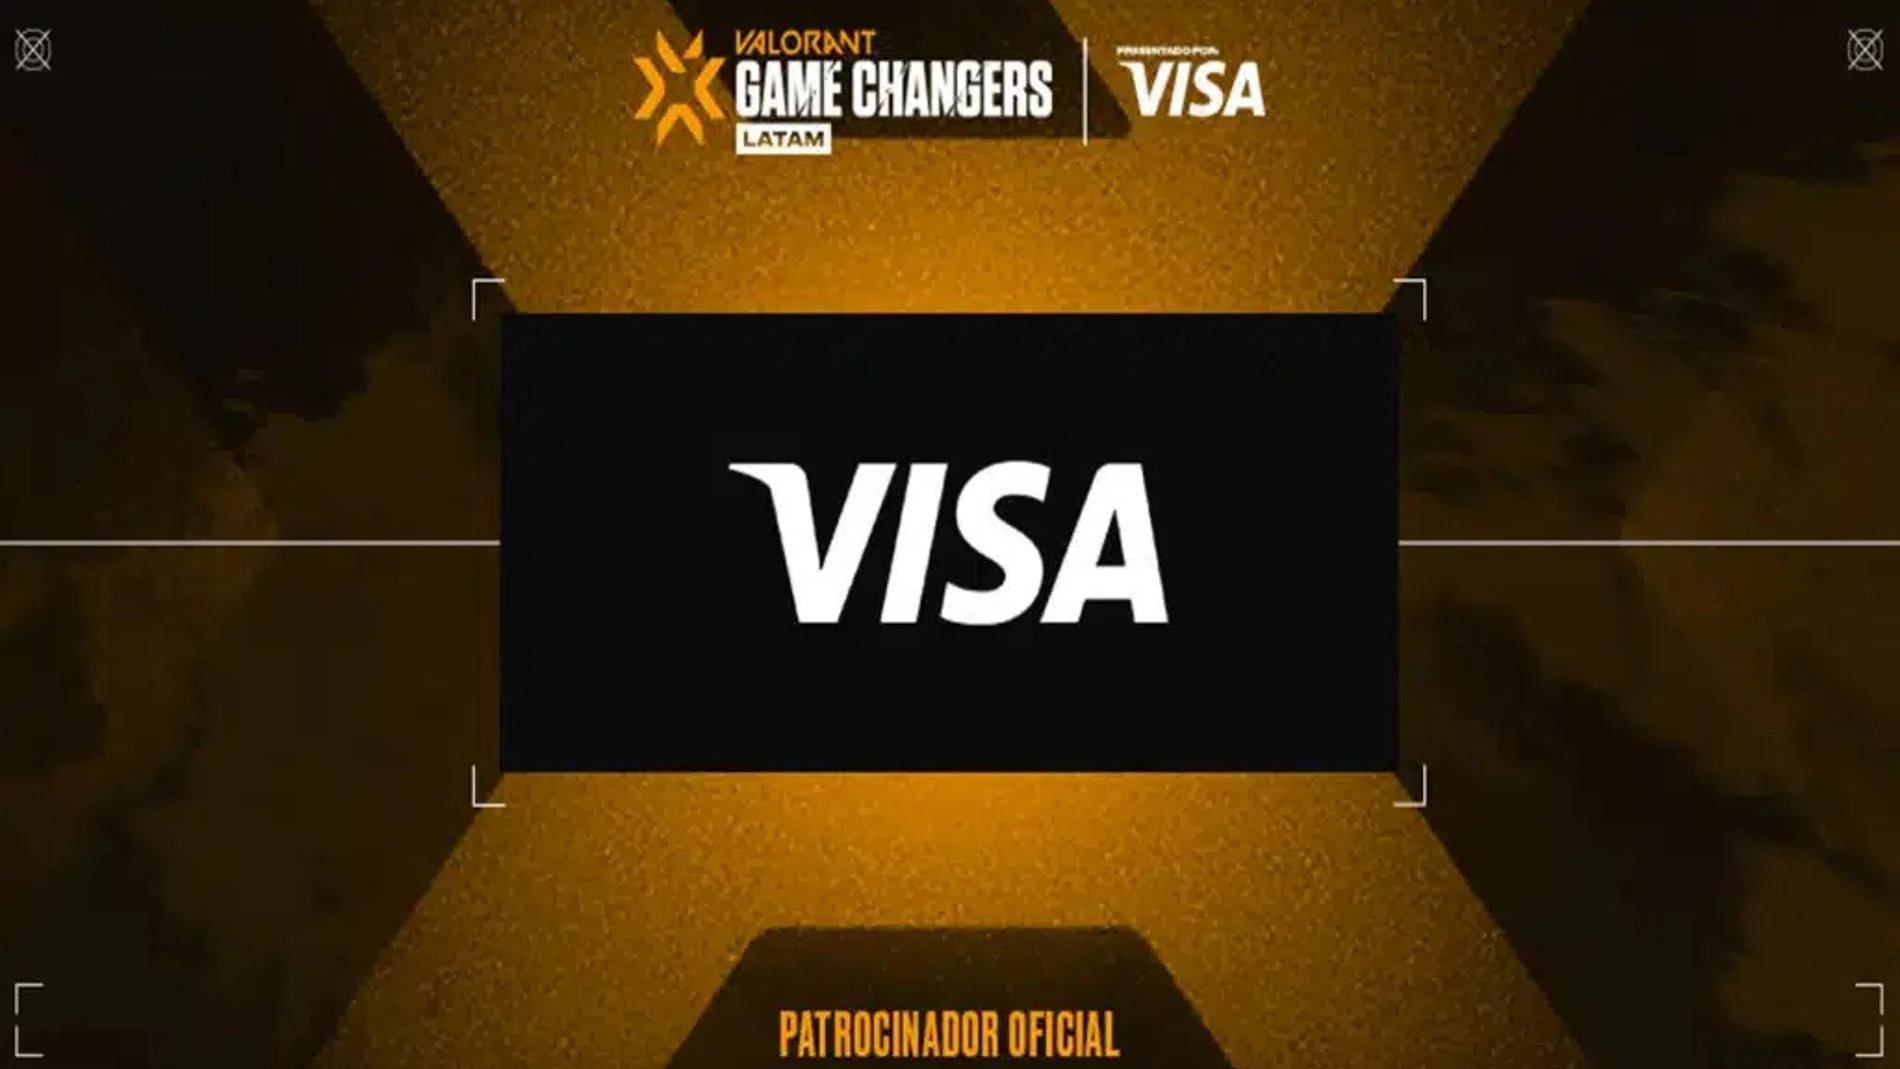 VISA x VCT Game Changers